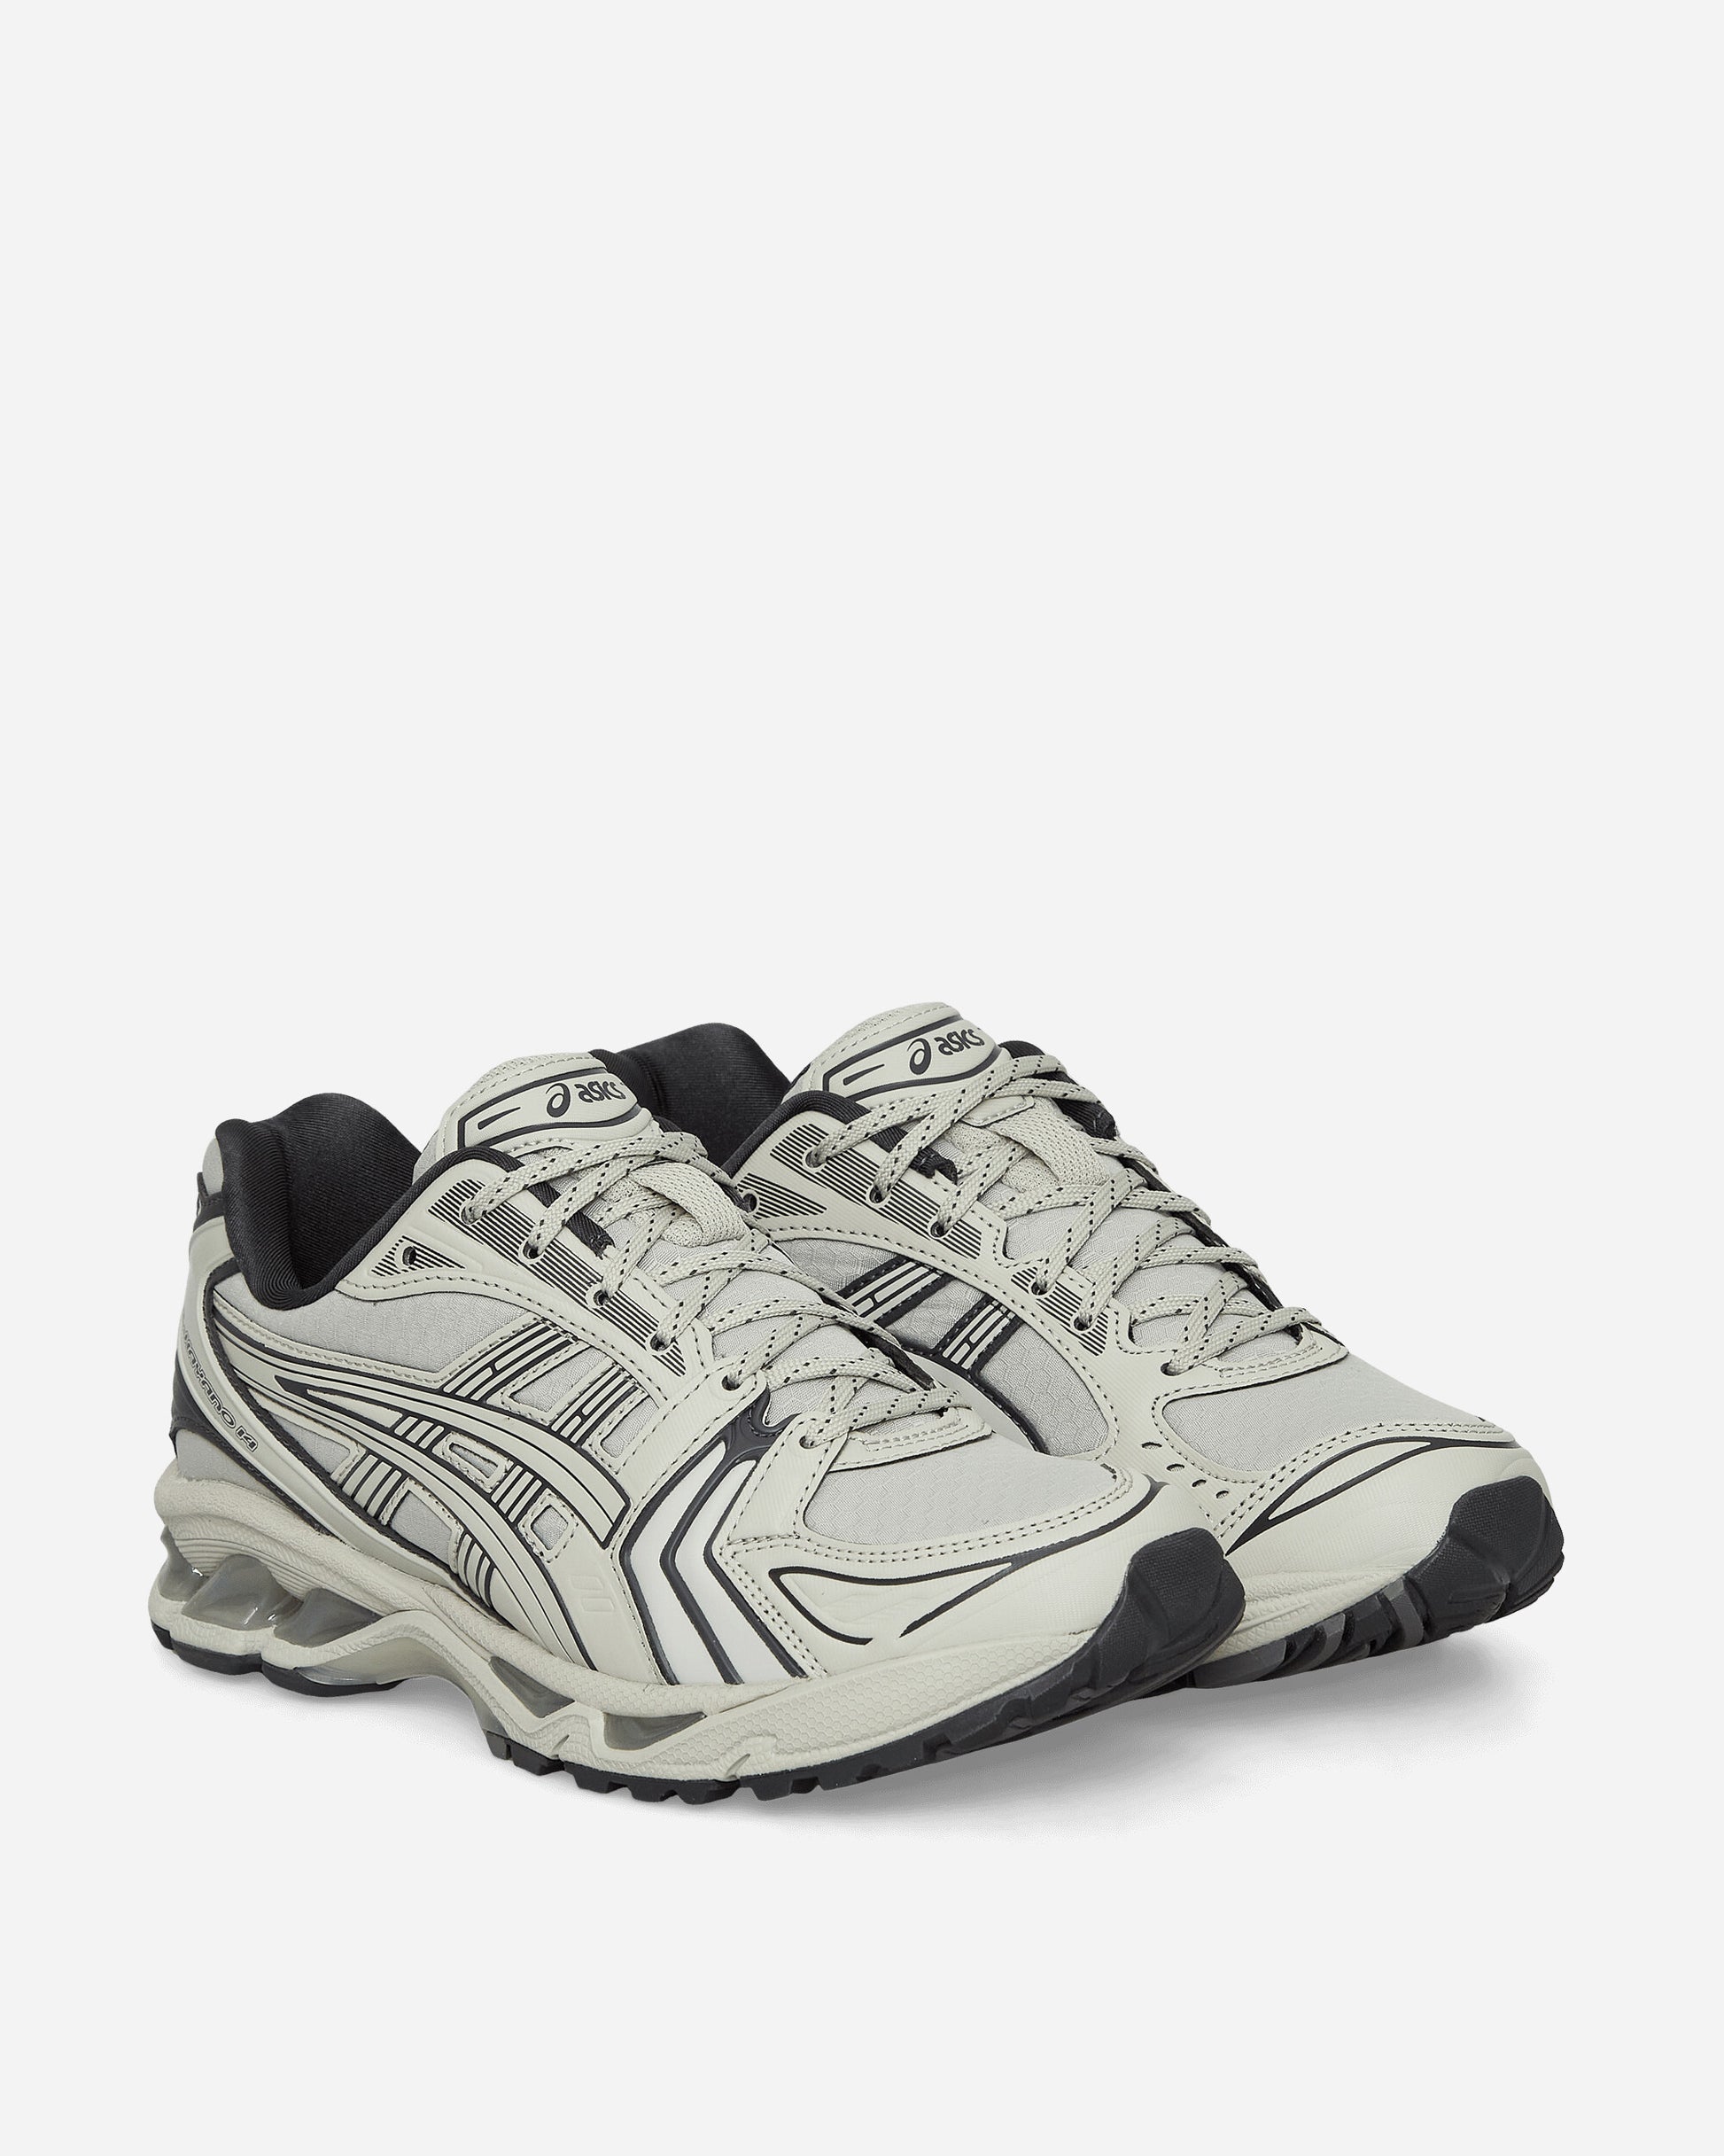 Asics Gel-Kayano 14 White Sage/Graphite Grey Sneakers Low 1203A412-020